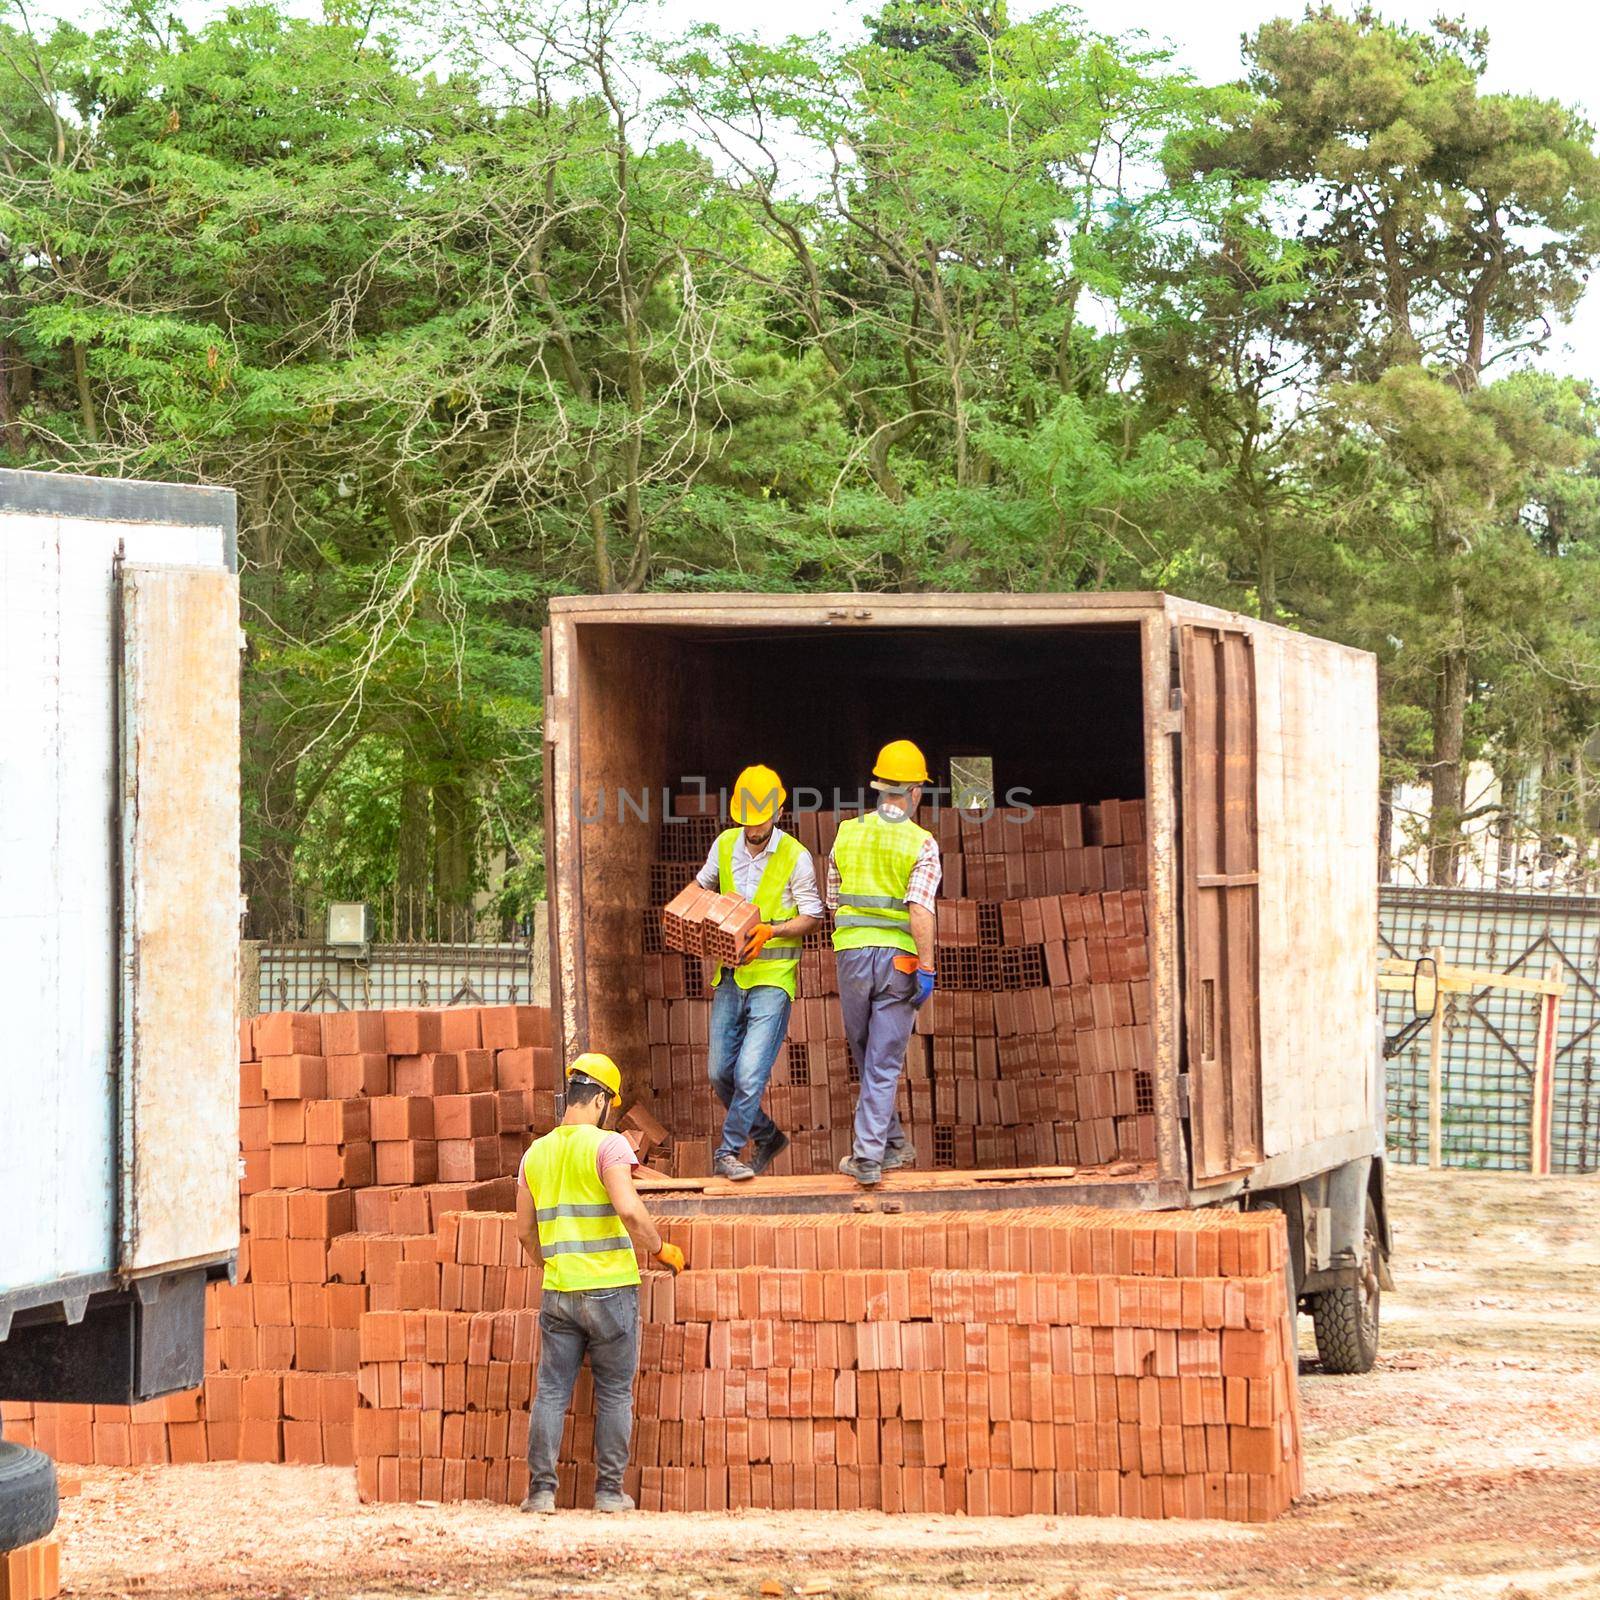 Construction workers unloading bricks